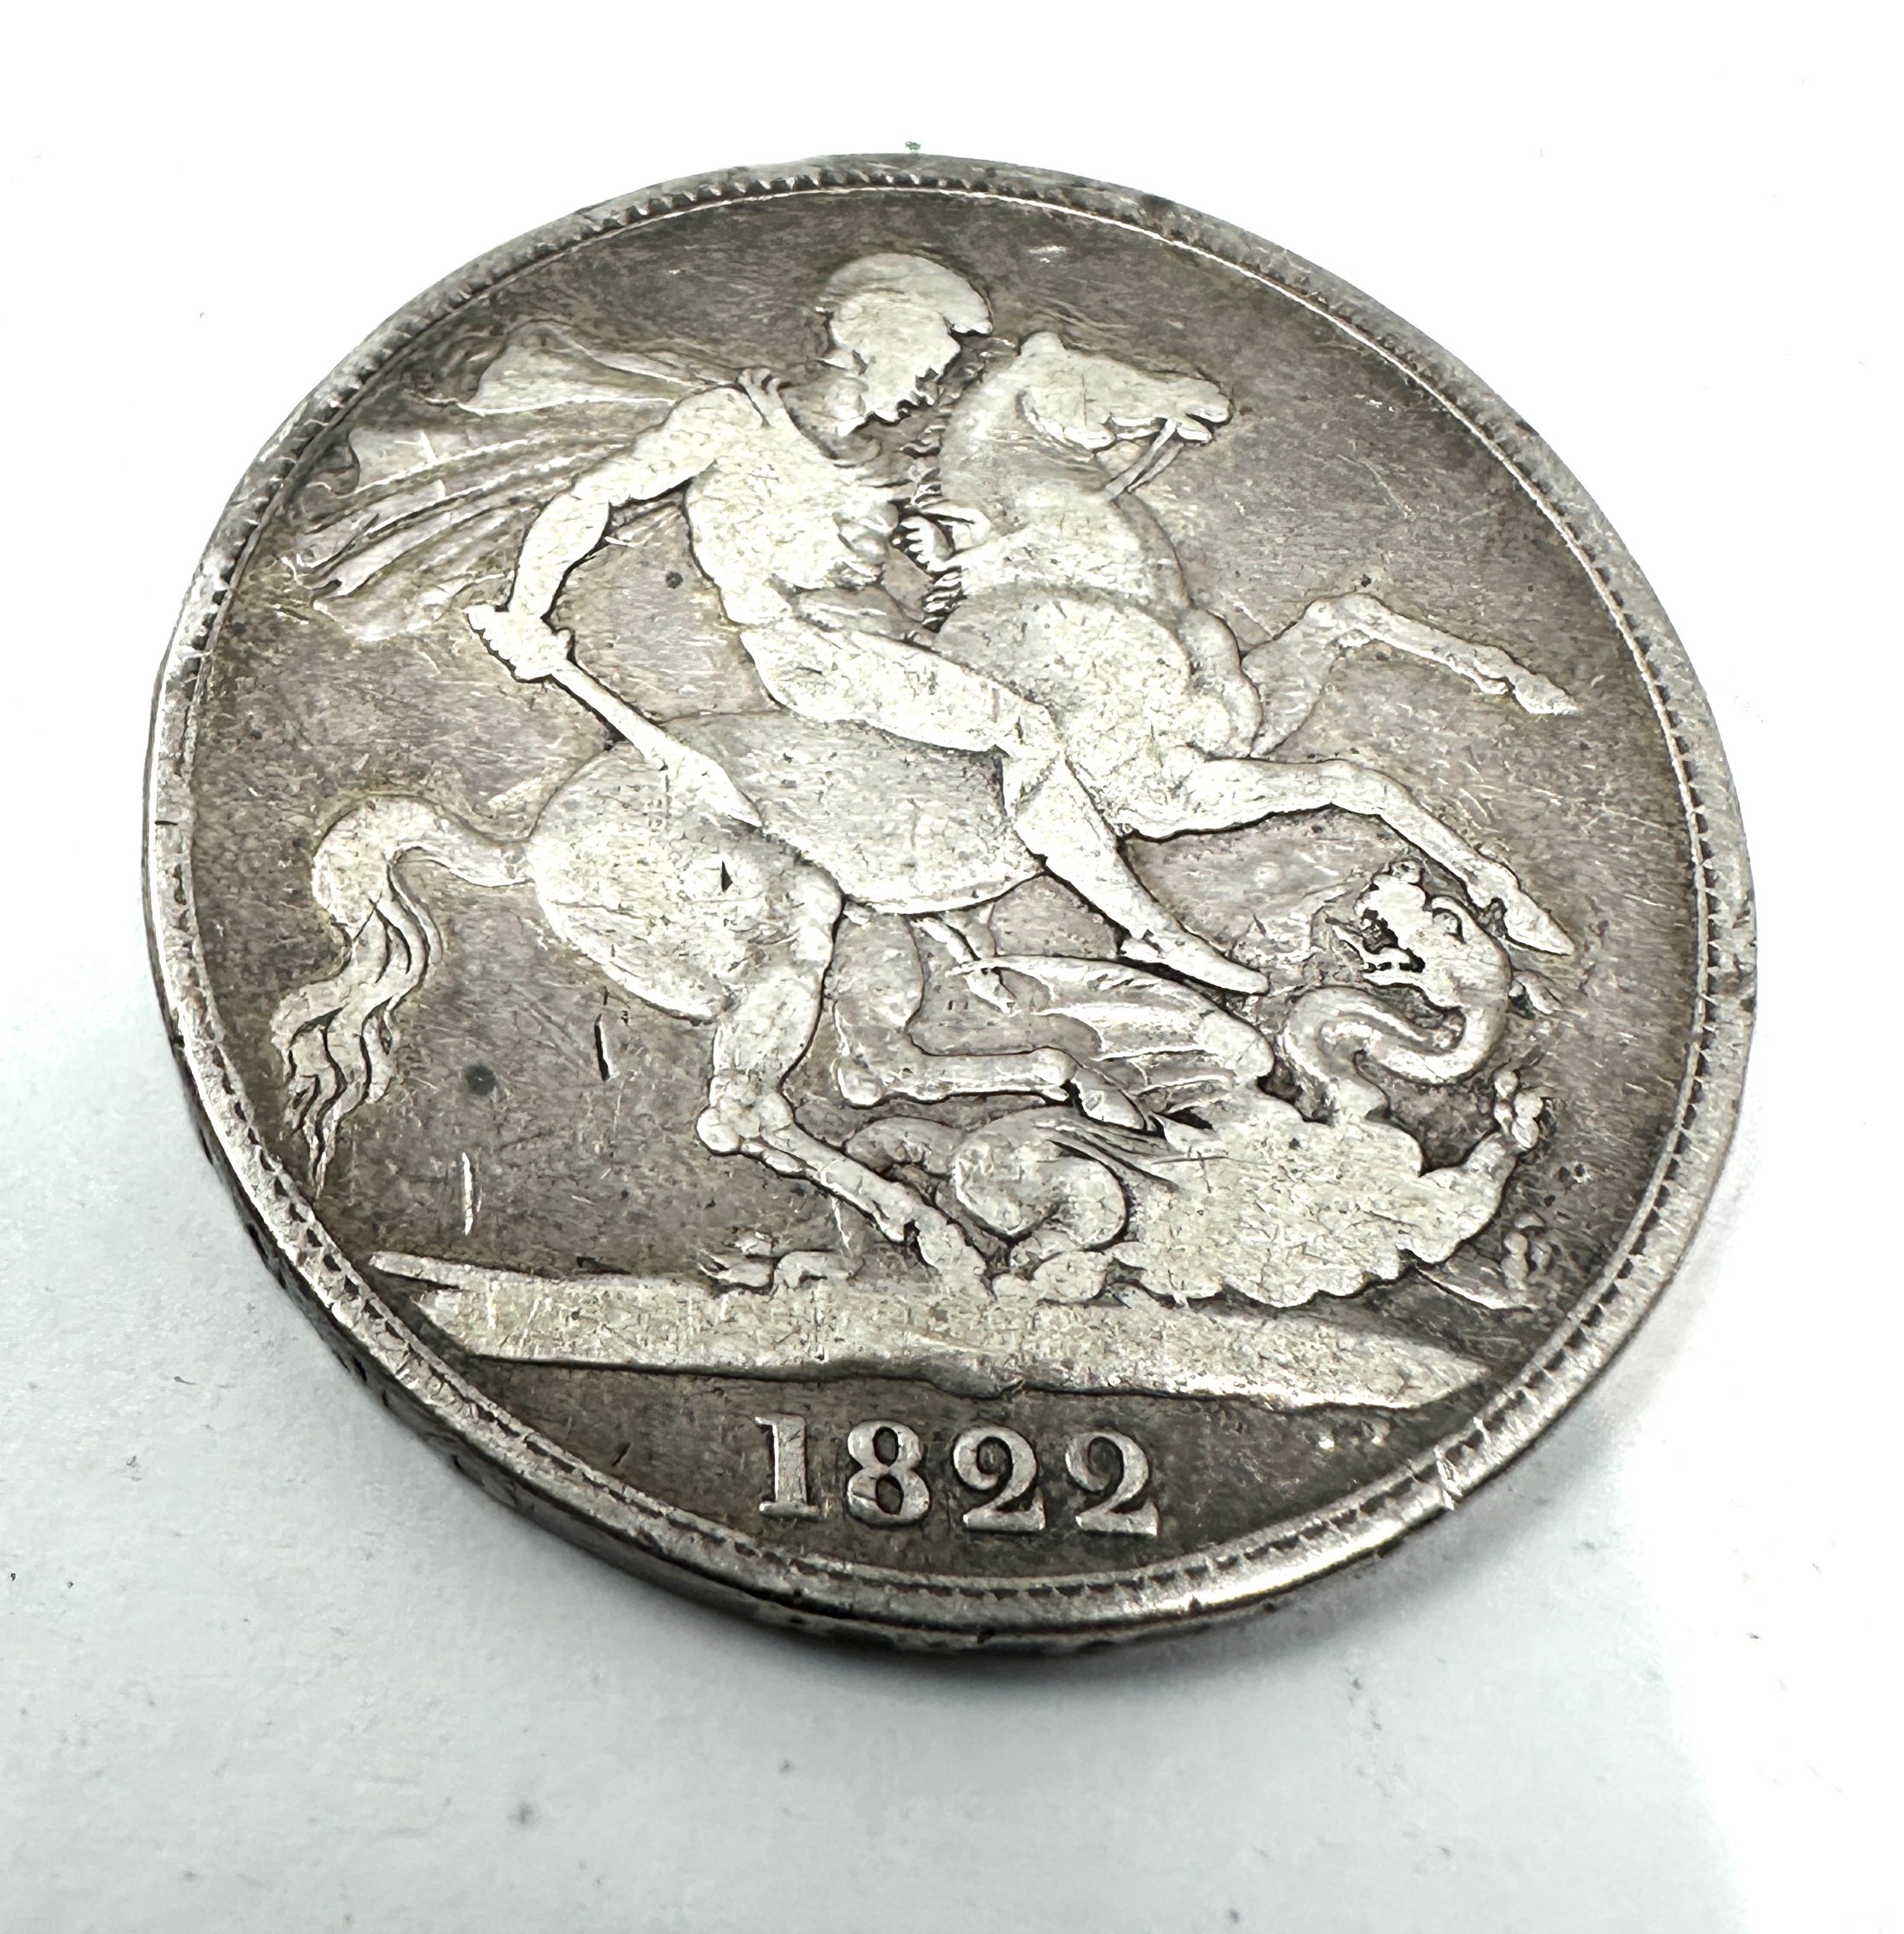 Georgian 1822 silver crown - Image 2 of 3